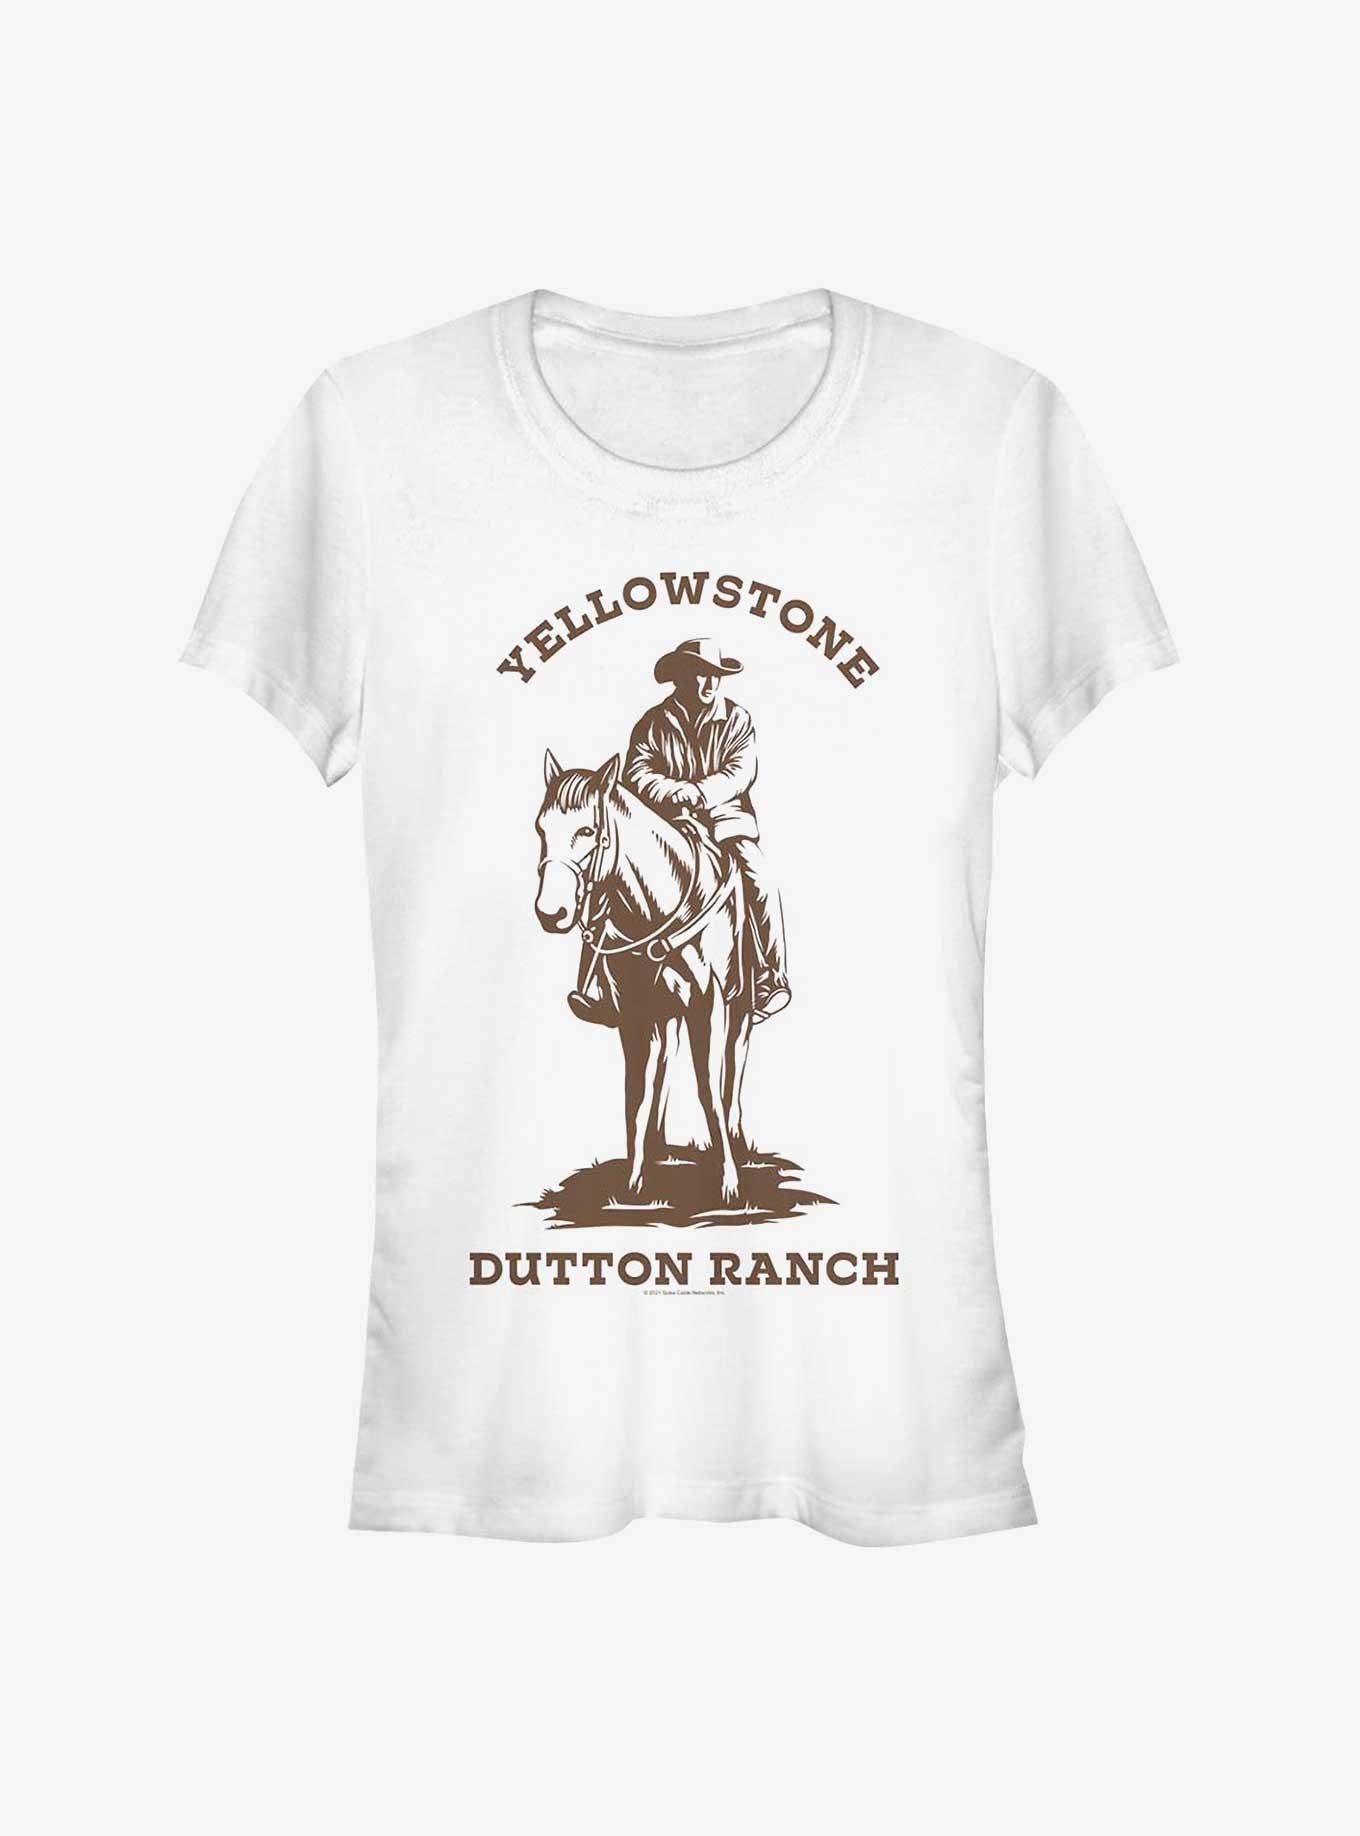 Yellowstone Man On Horse Brown Girls T-Shirt